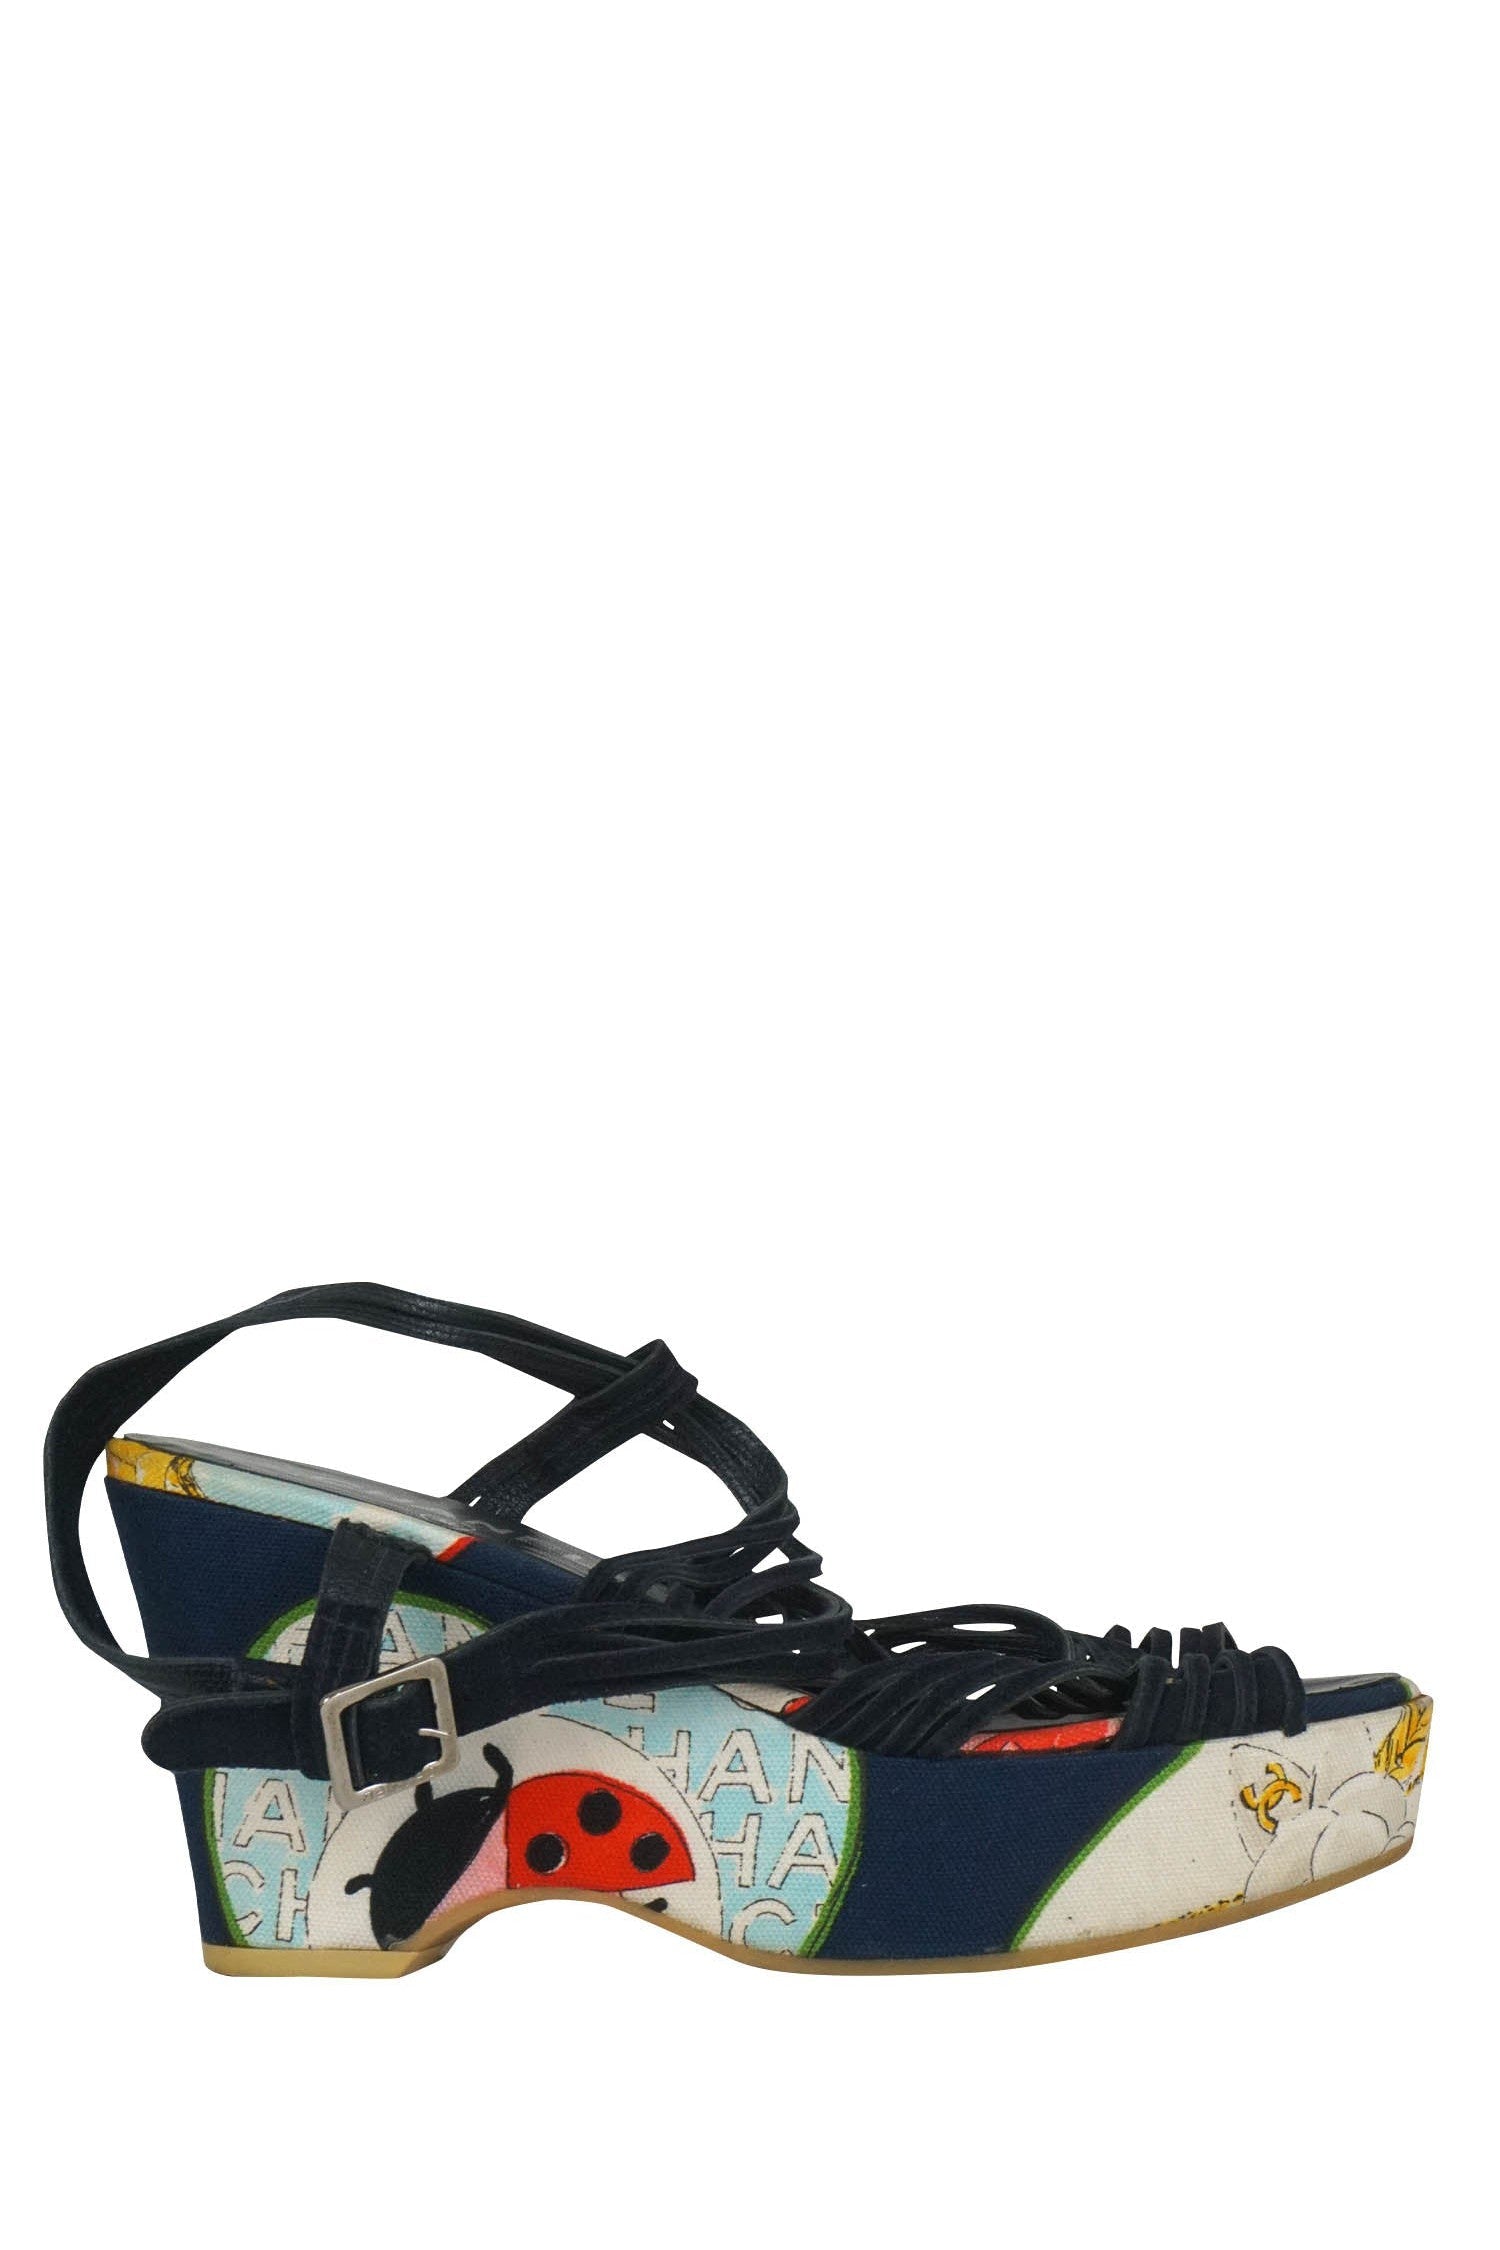 Chanel Vintage Ladybug Canvas Wedge Sandals - Foxy Couture Carmel